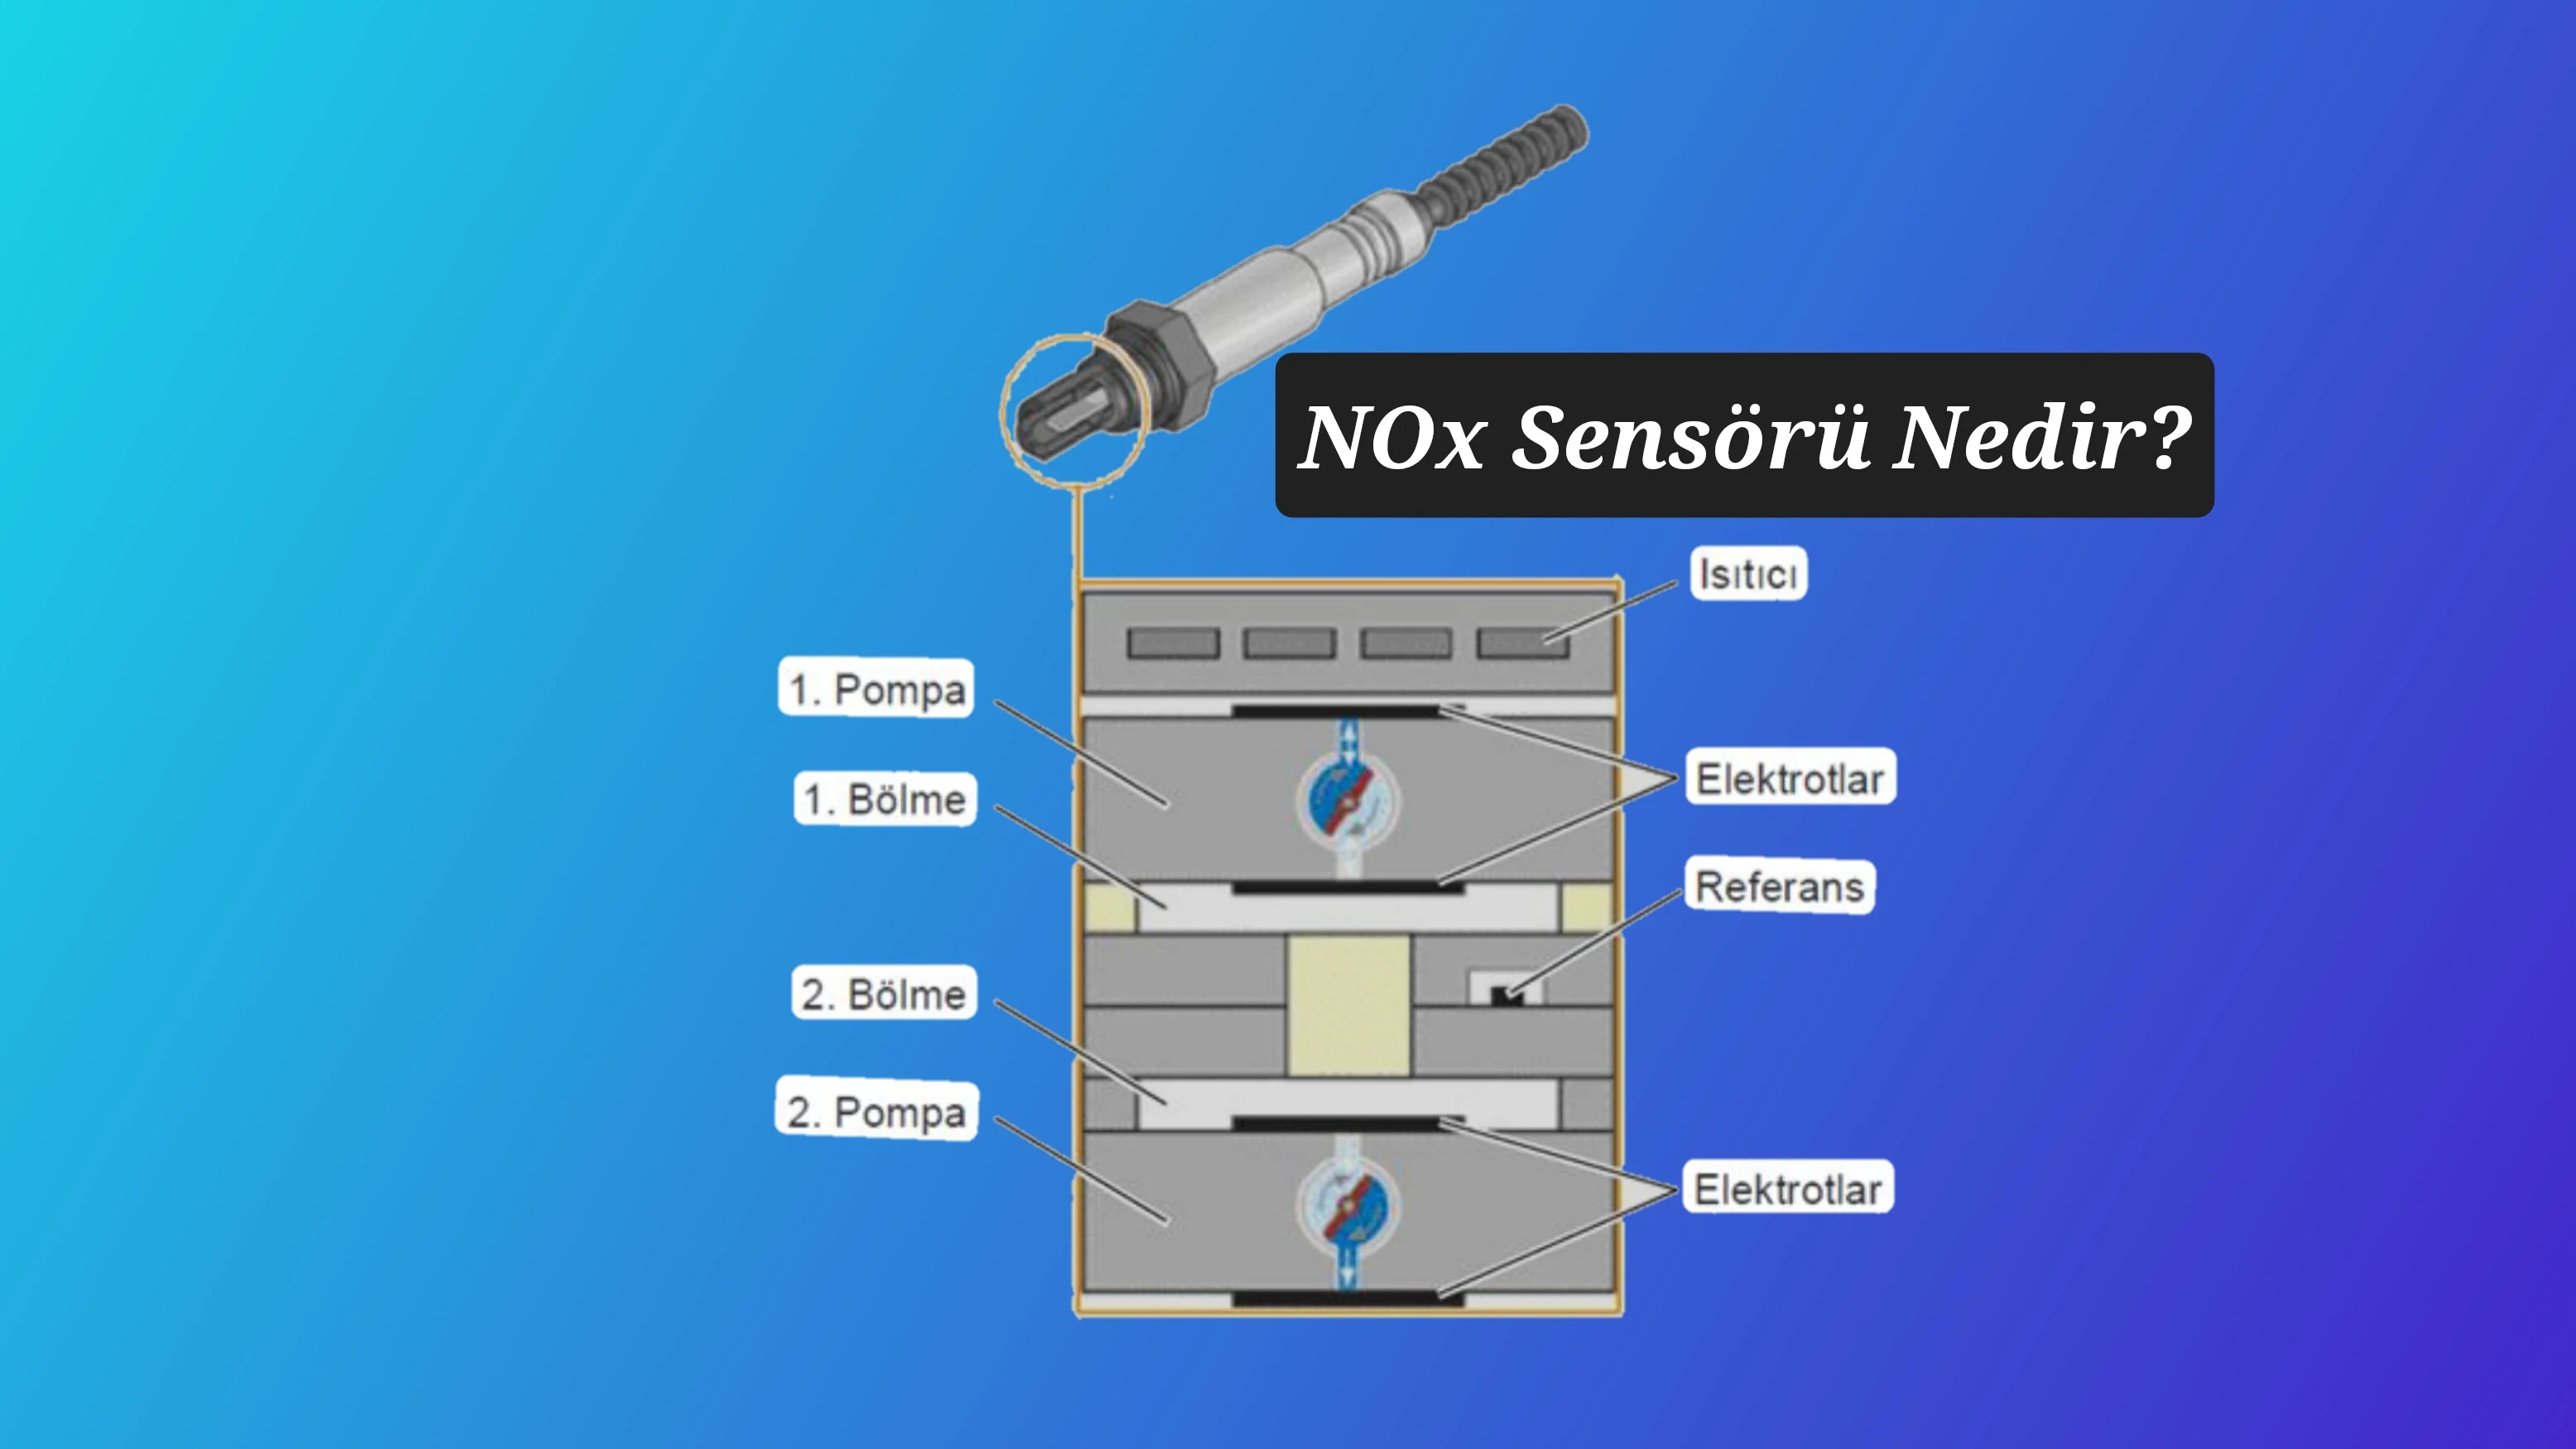 NOx Sensörü Nedir? Ne İşe Yarar?